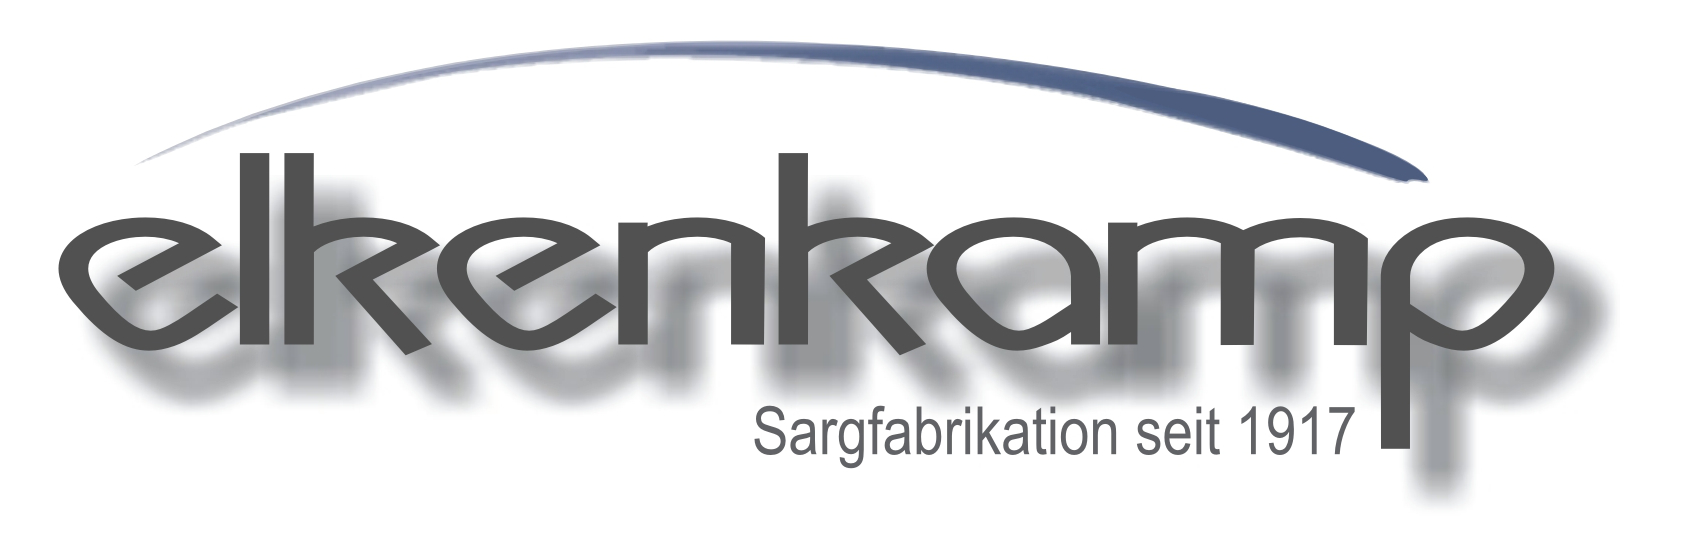 Elkenkamp - Sargfabrikation seit 1917